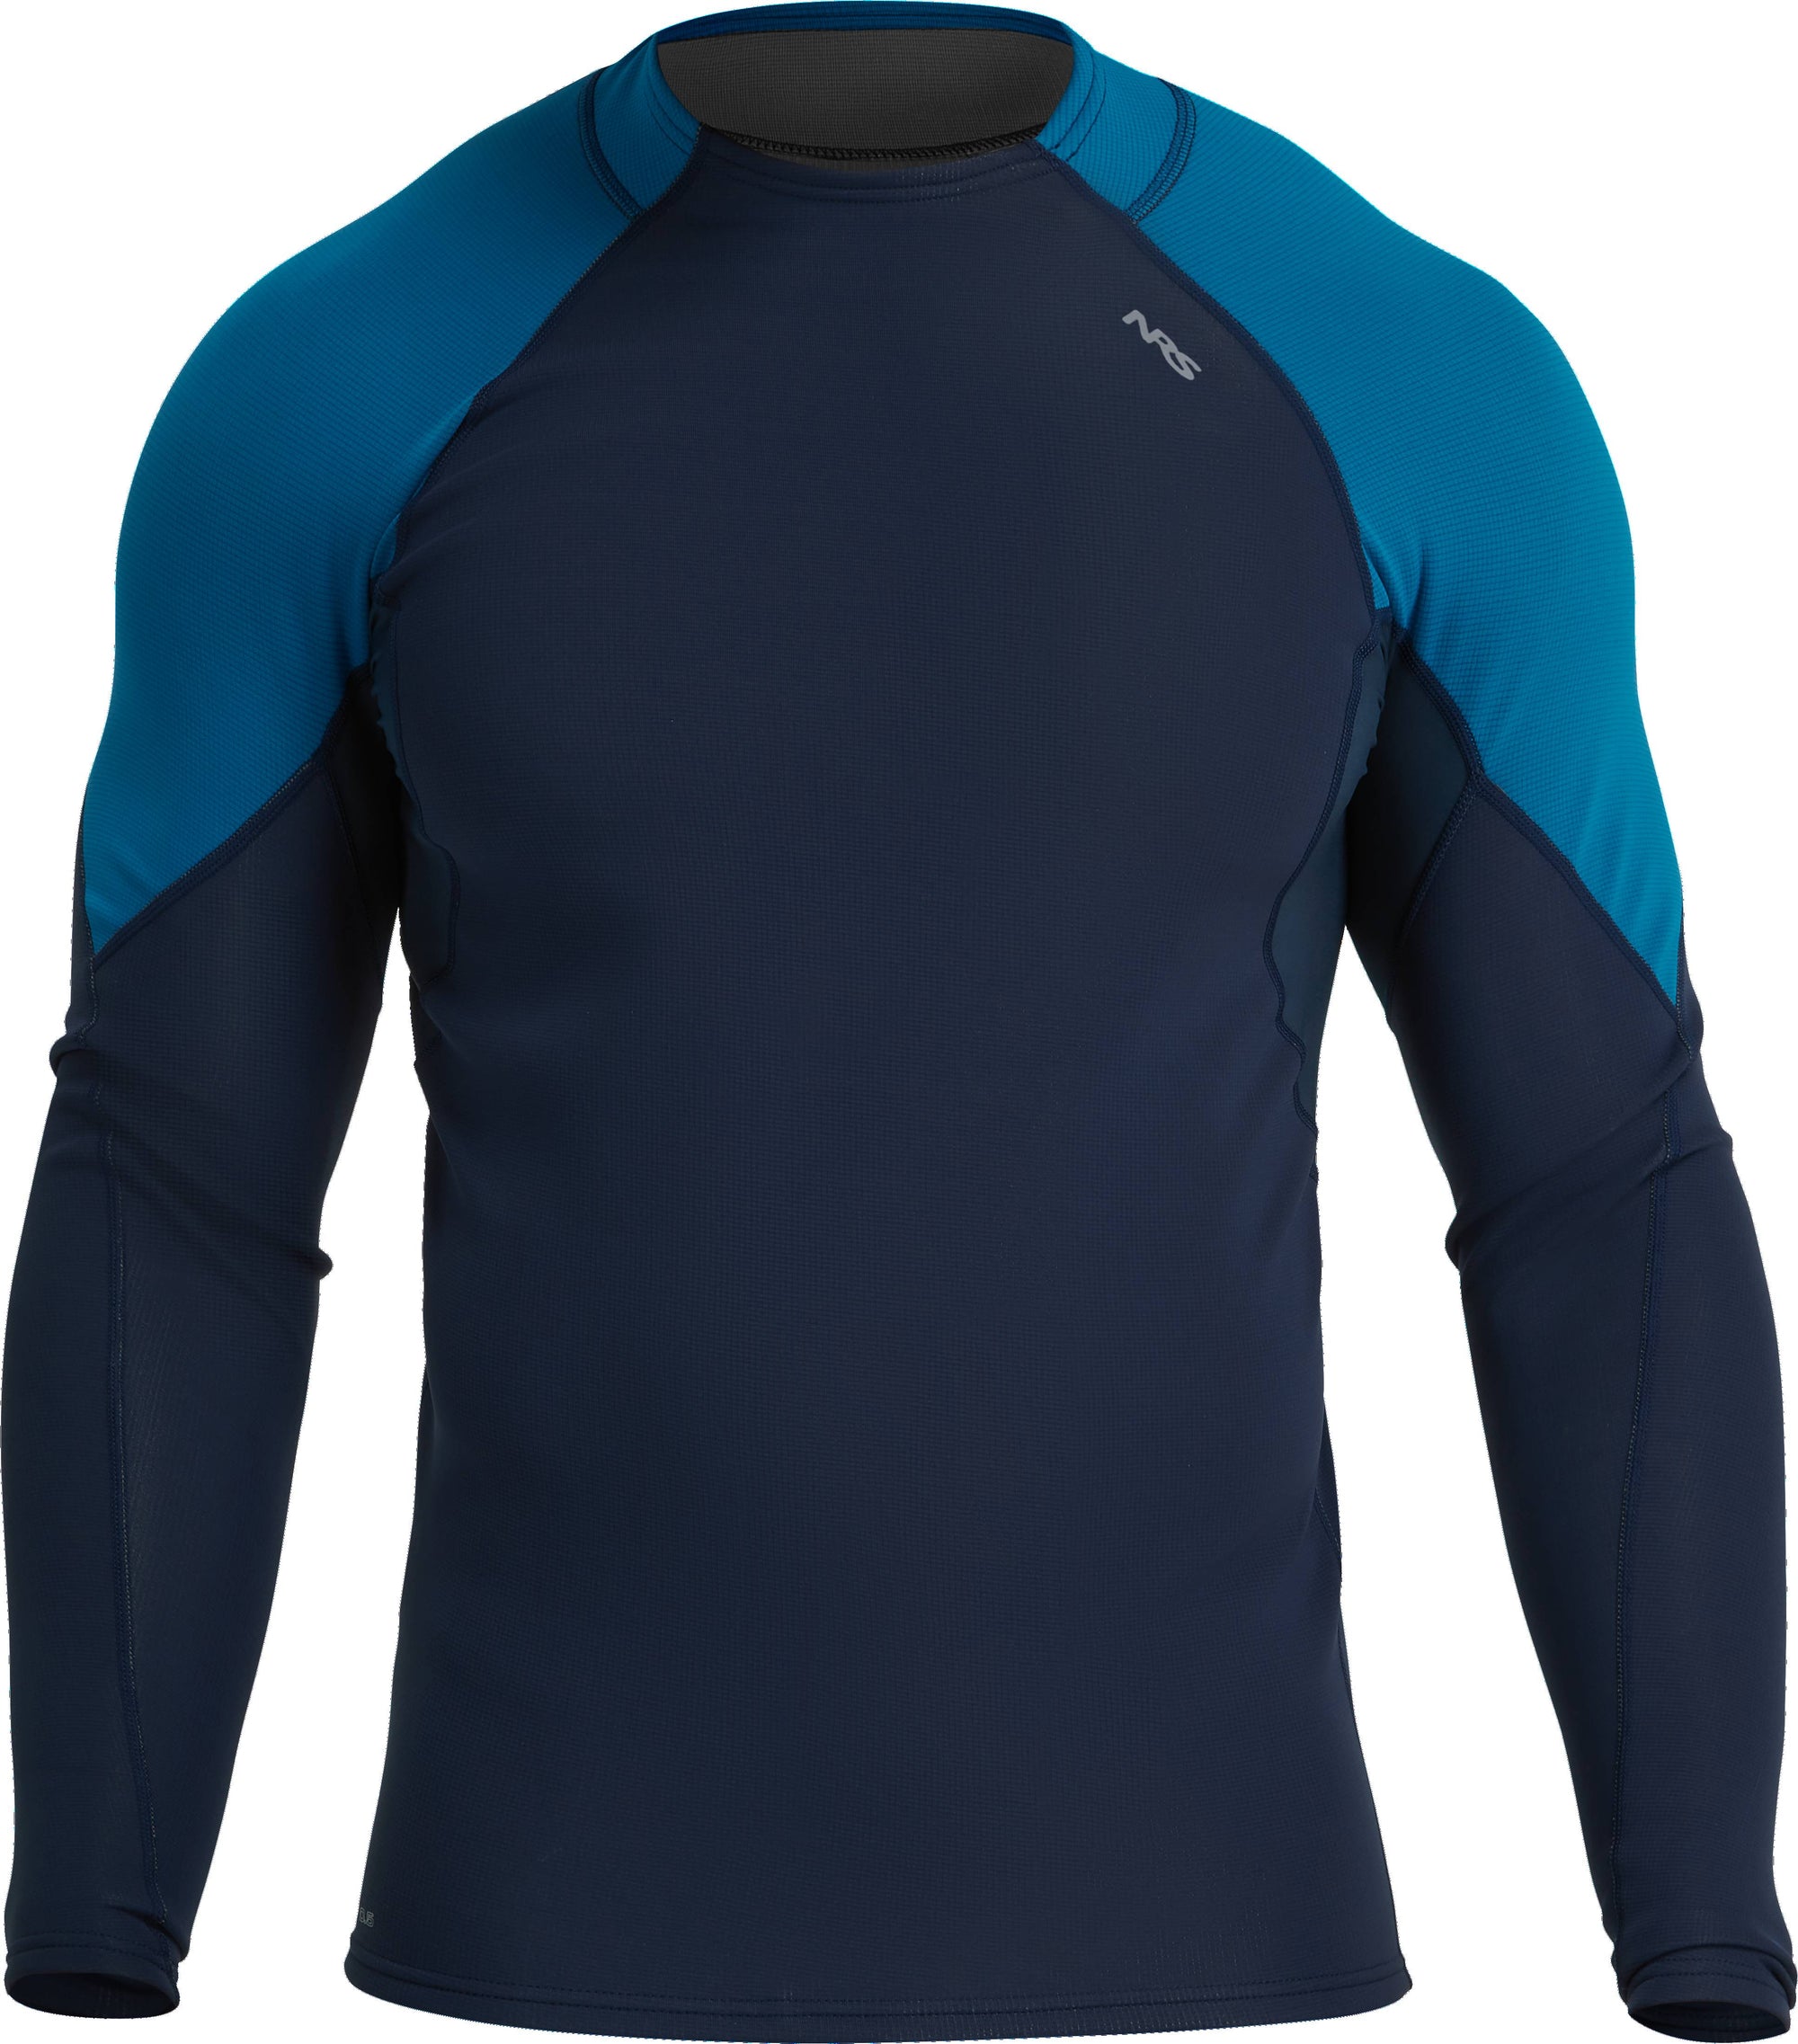 NRS HydroSkin 0.5 Men's Long-Sleeve Shirt